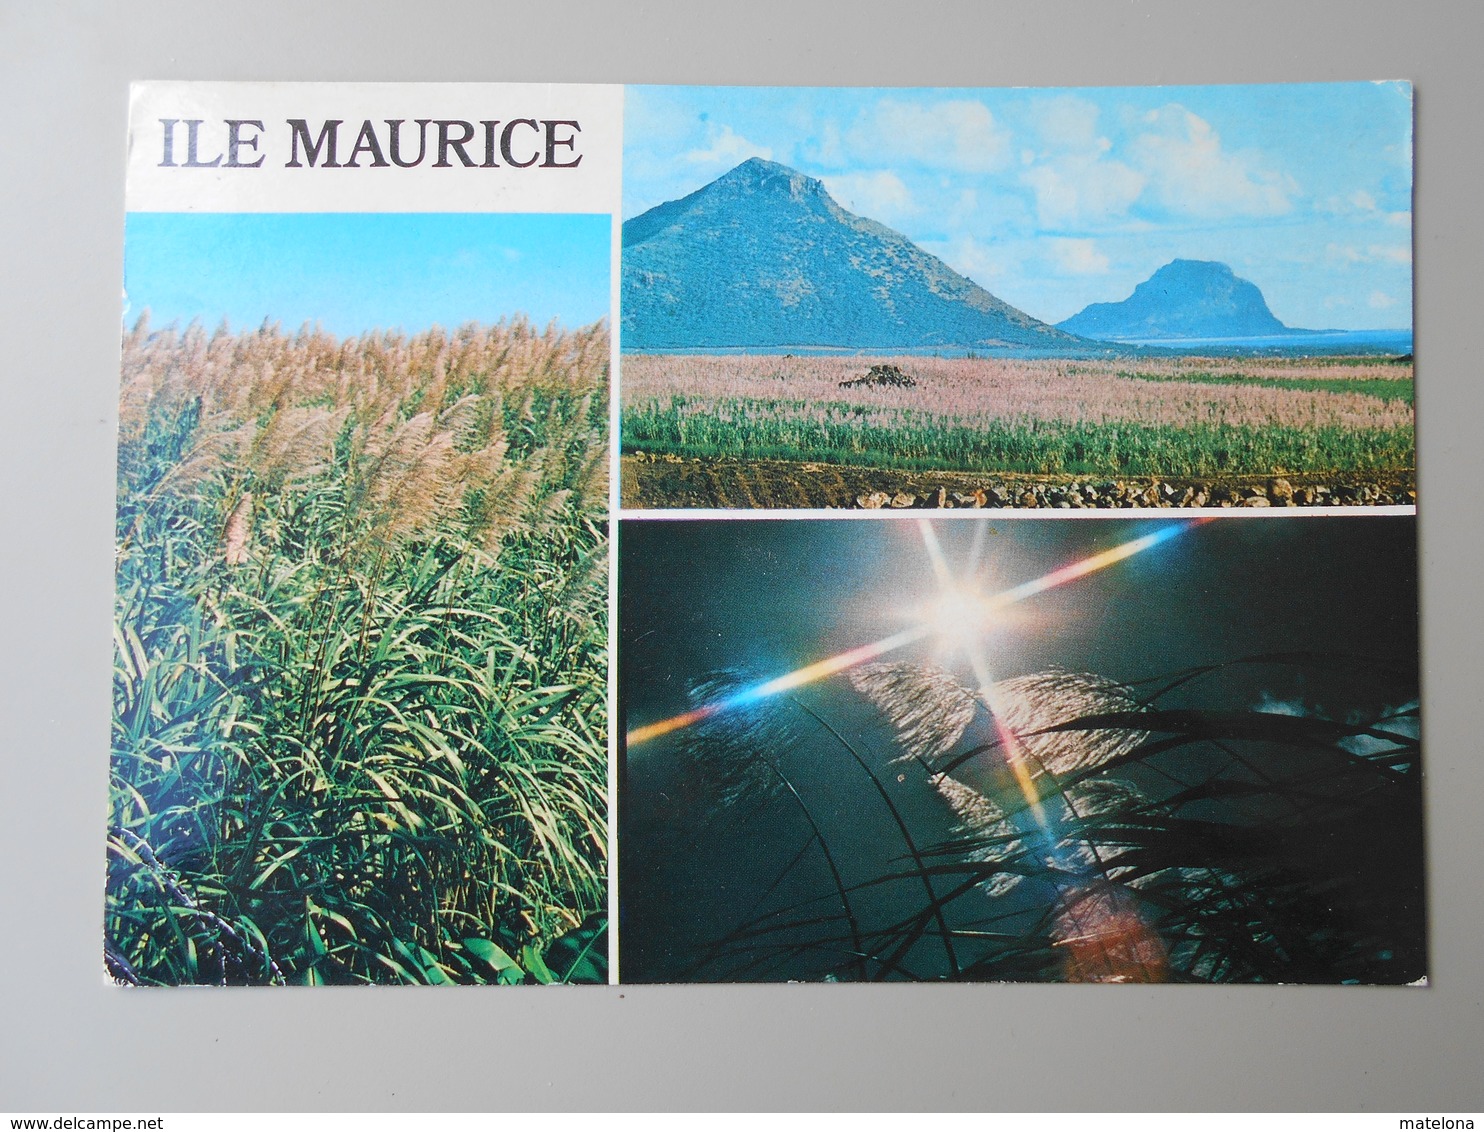 MAURICE ILE MAURICE  MAURITIUS LES FLEURS DE CANNE A SUCRE - Maurice